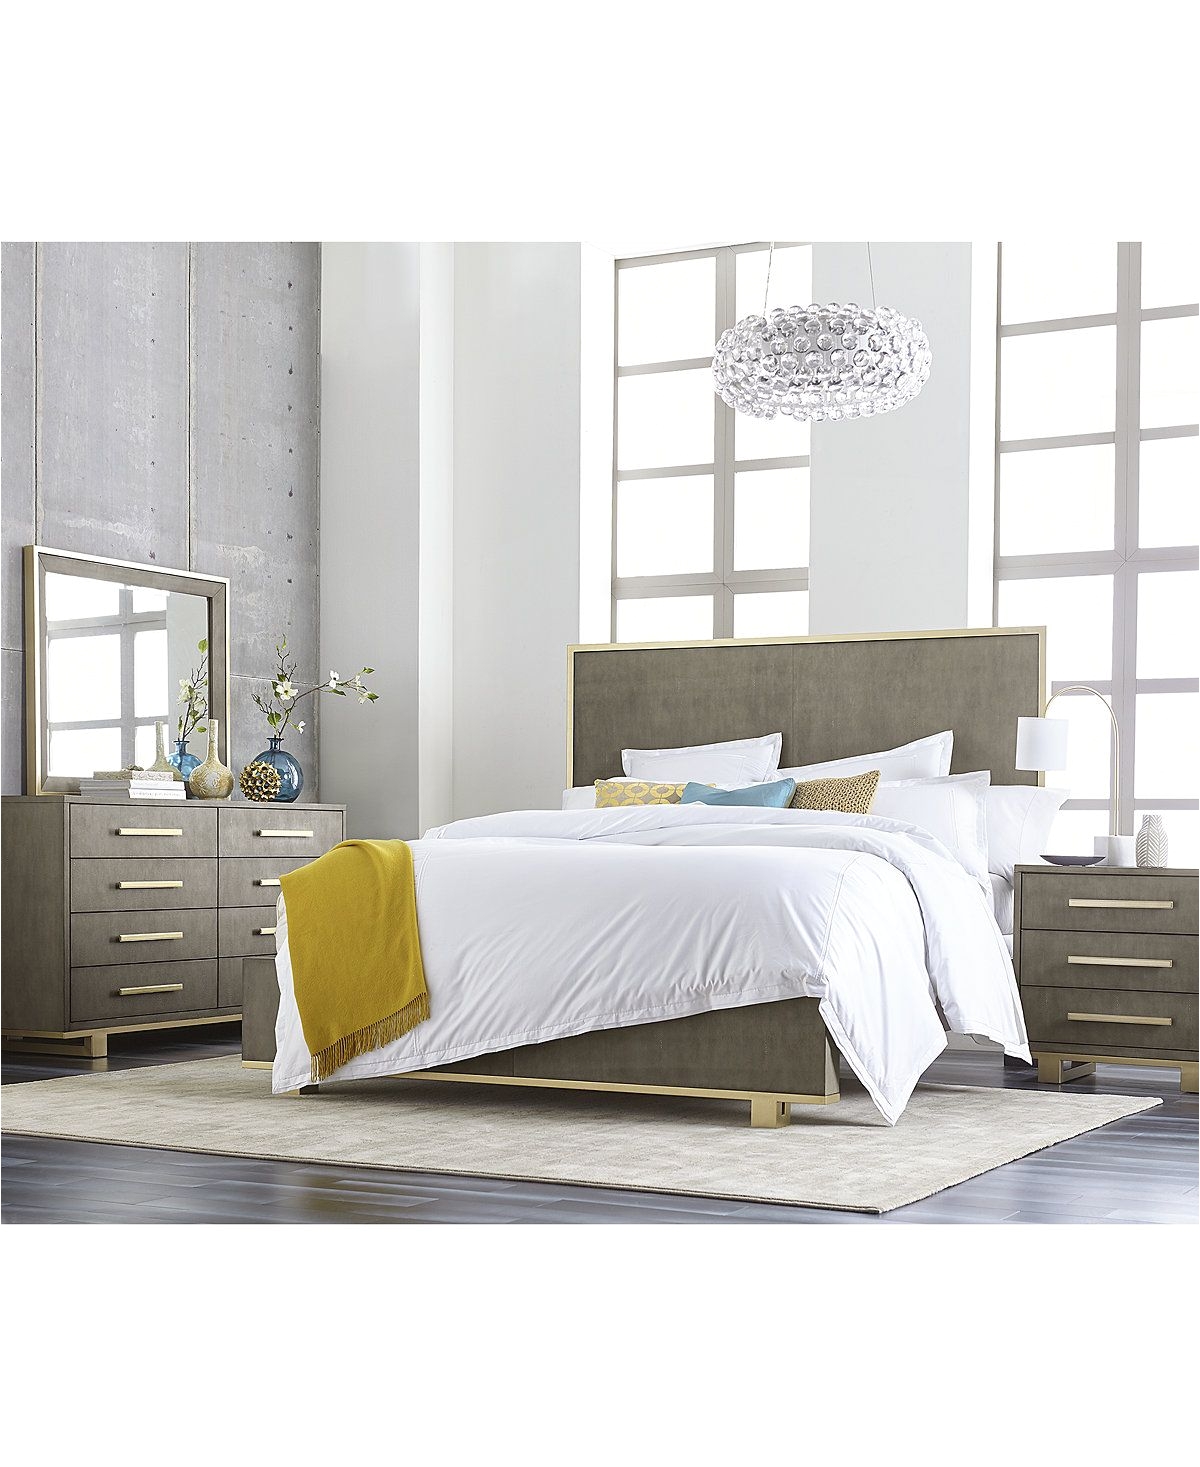 petra shagreen bedroom furniture 3 pc set queen bed dresser